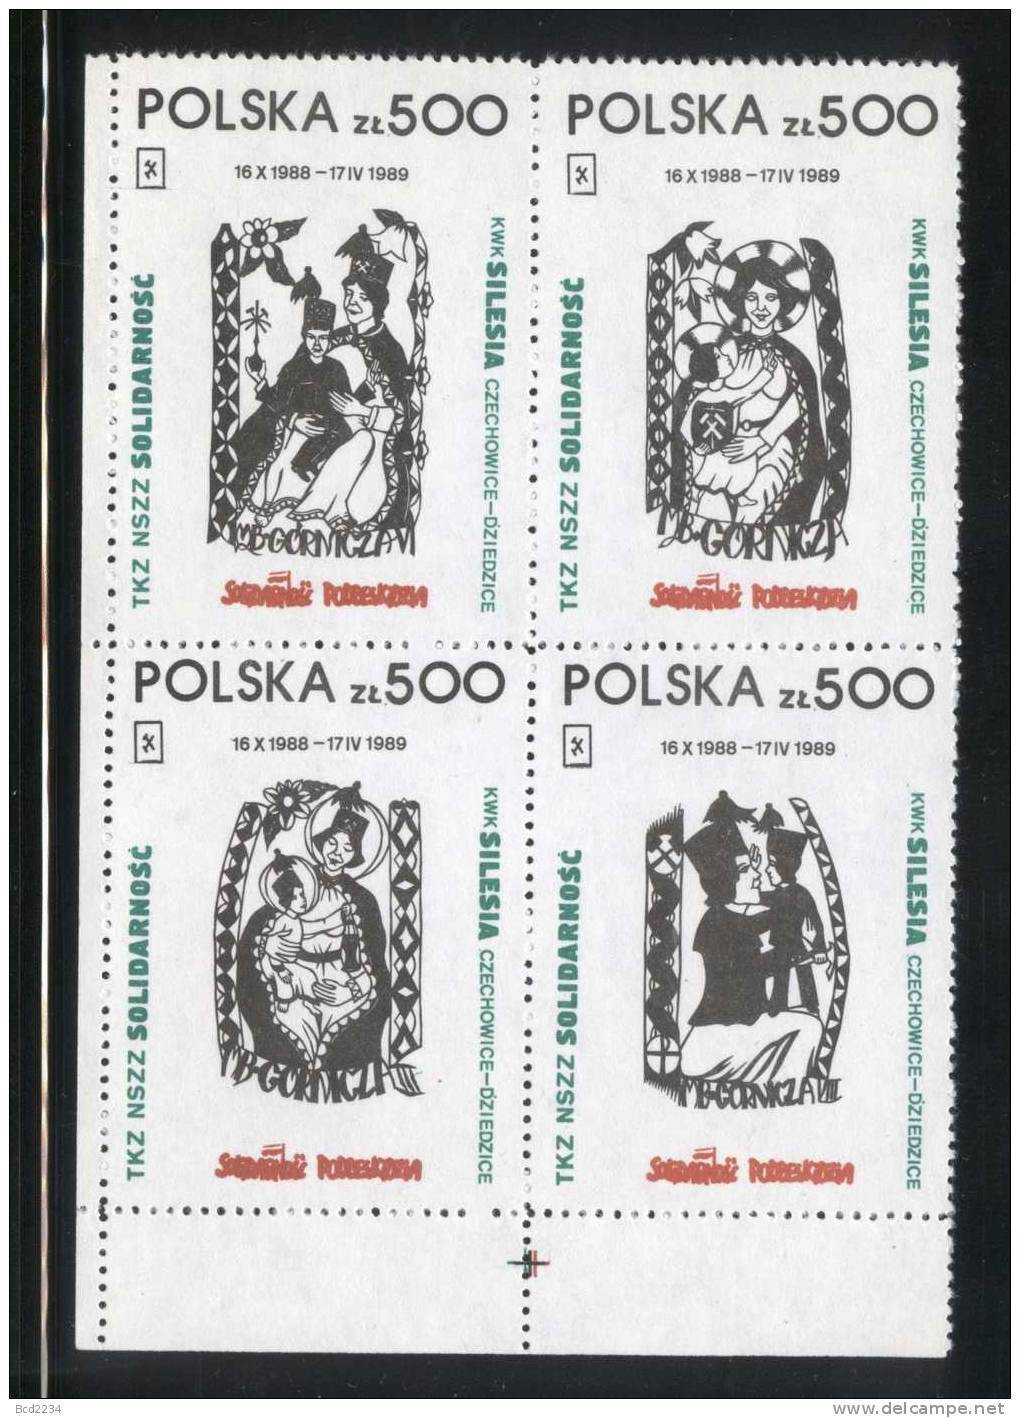 POLAND SOLIDARNOSC (TKZ NSZZ SOLIDARNOSC) 1989 RELIGIOUS SCENES MADONNAS BLOCK OF 4 CANCELLED (SOLID0779/1356) - Vignette Solidarnosc